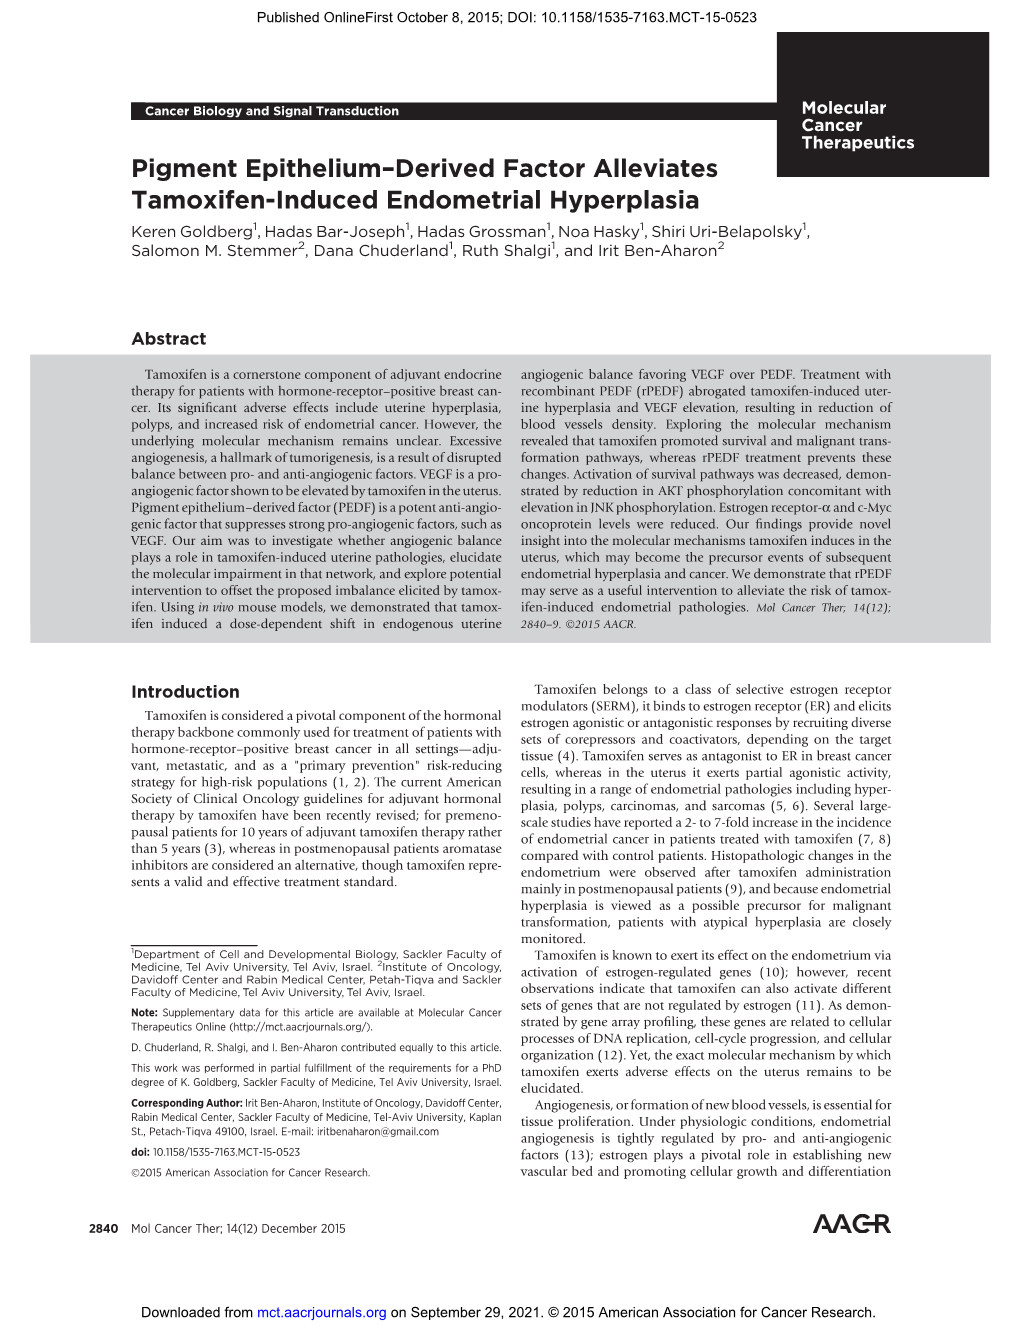 Pigment Epithelium–Derived Factor Alleviates Tamoxifen-Induced Endometrial Hyperplasia